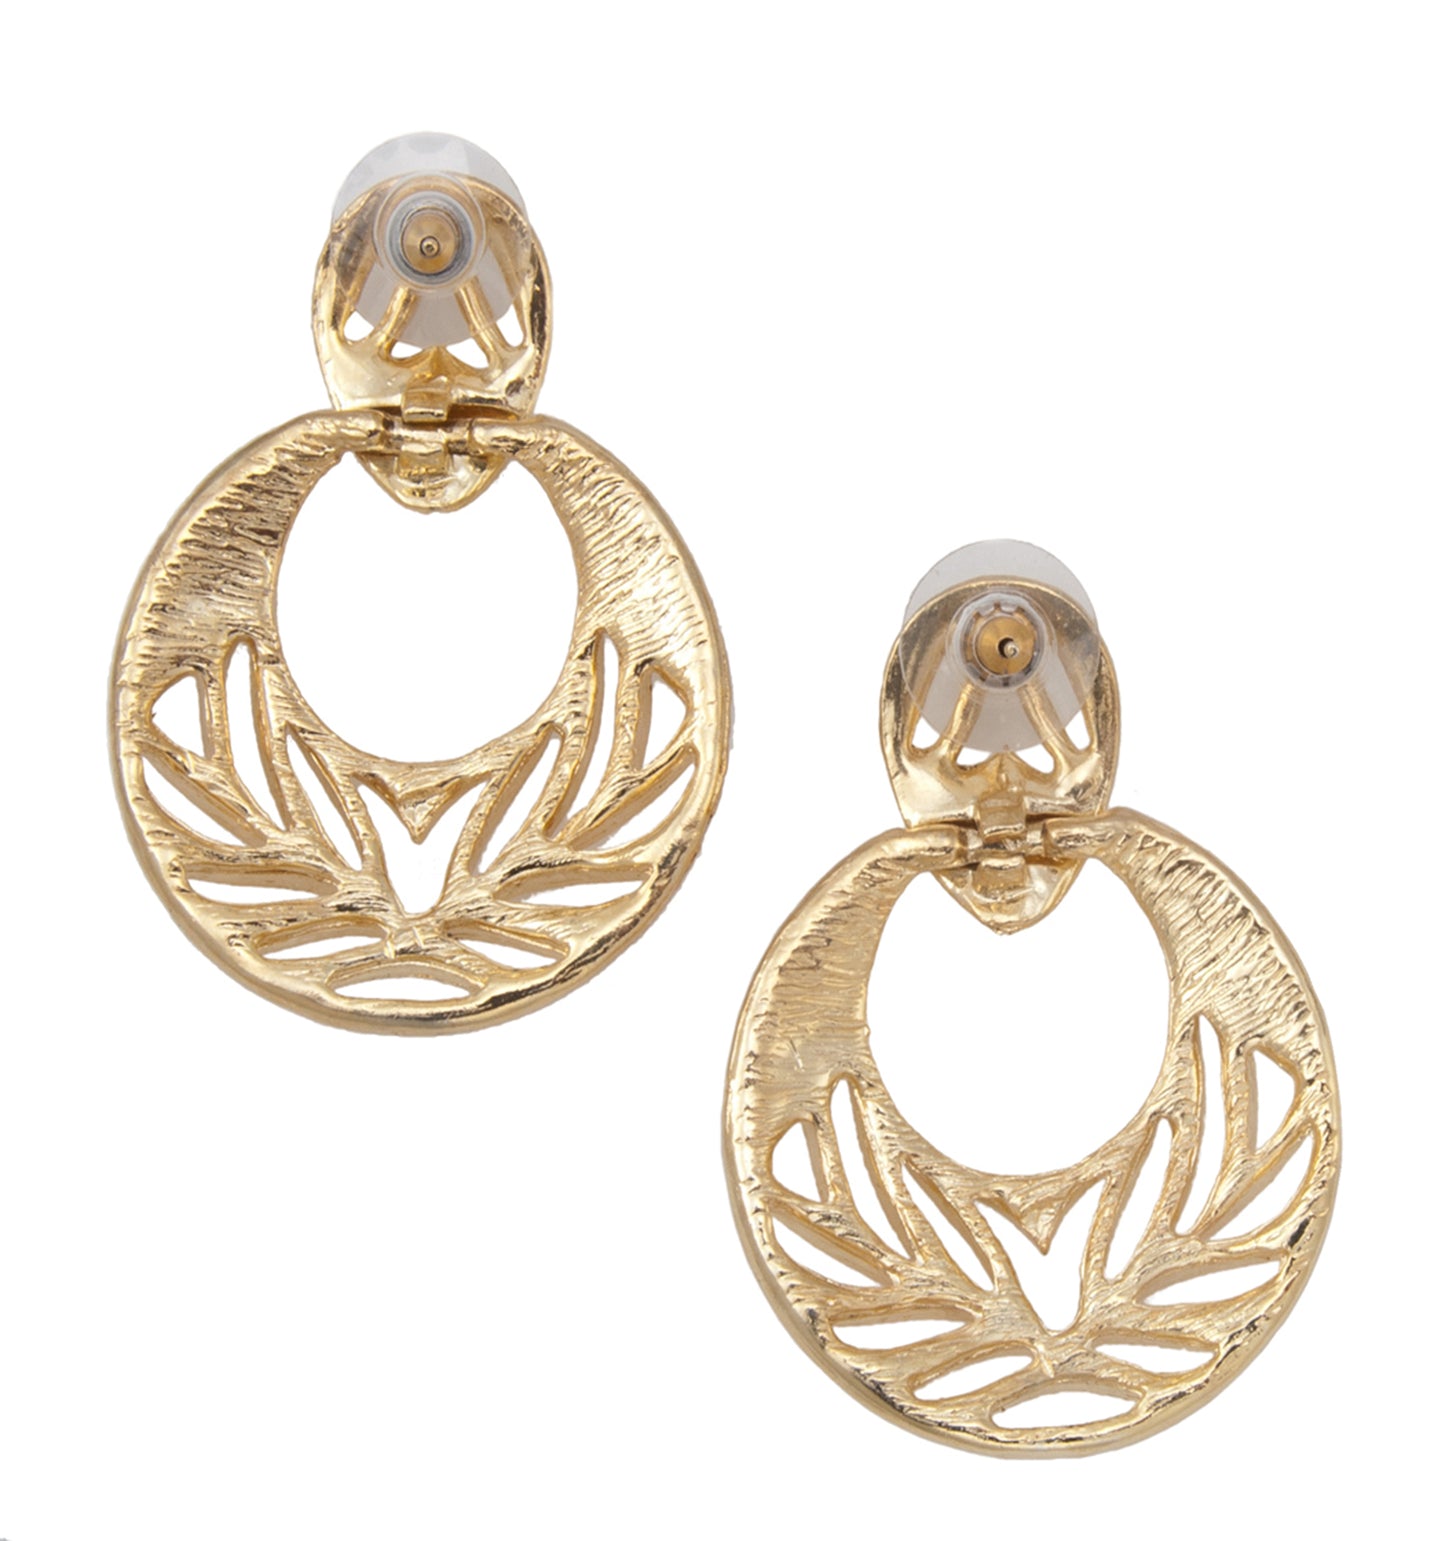 Openwork Leaf Design Door Knocker Earrings Pierced Drop - Gold Tone 2"